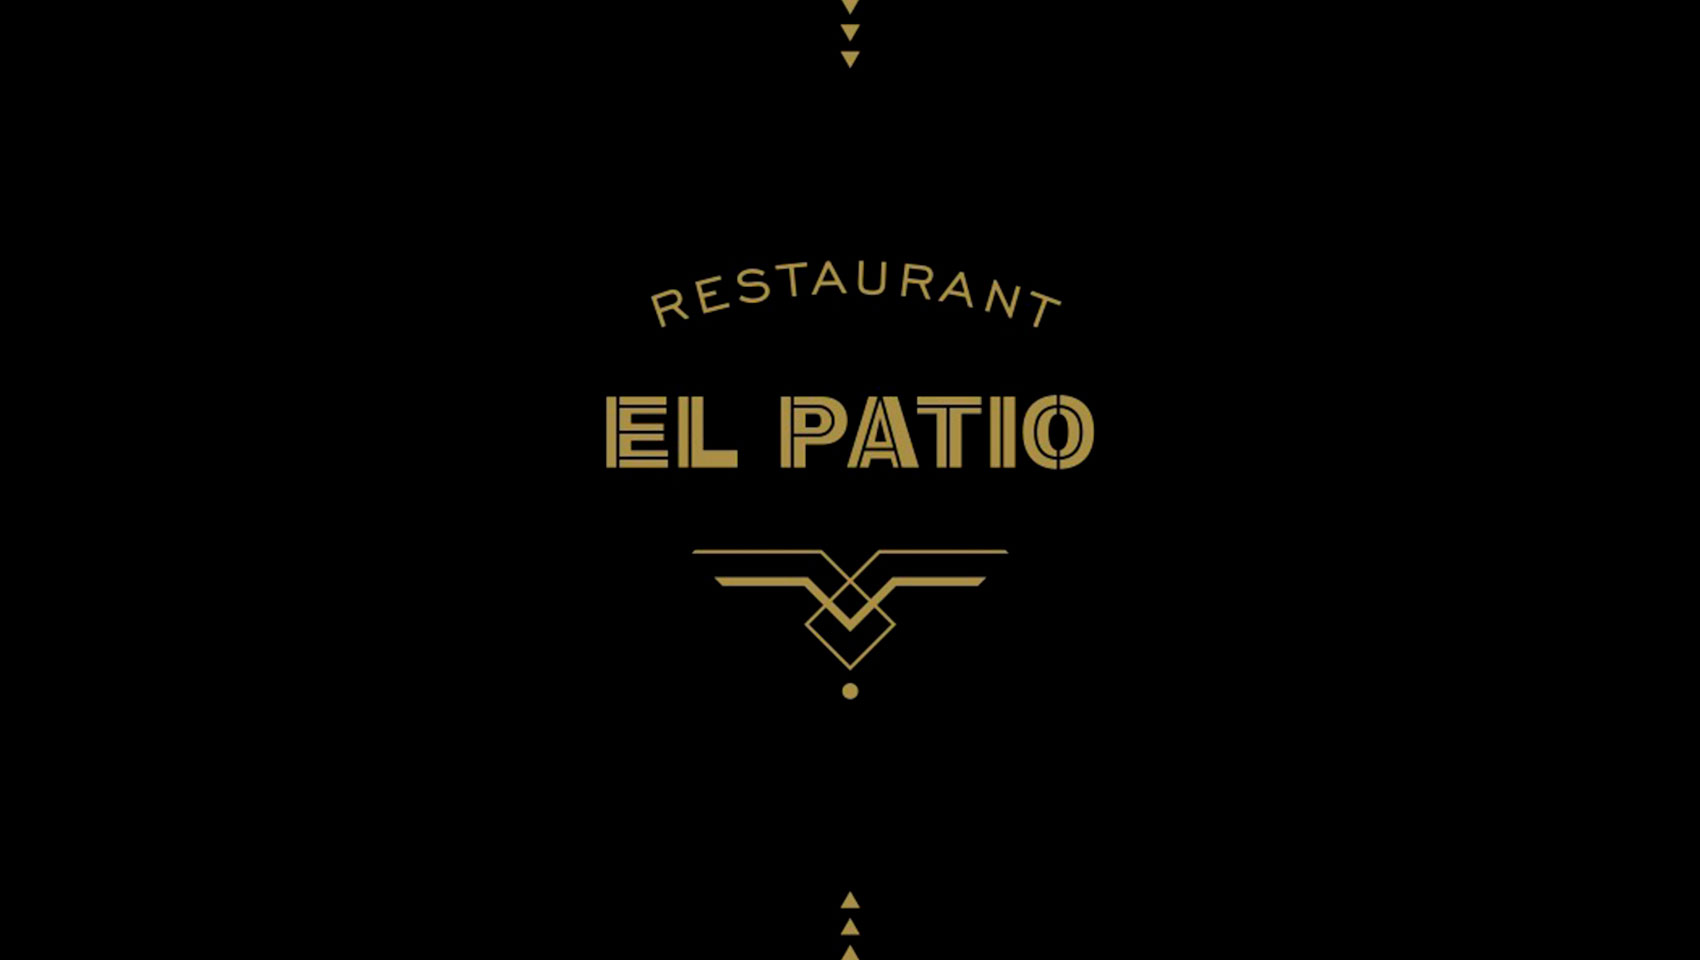 Restaurant El Patio gold logo on black